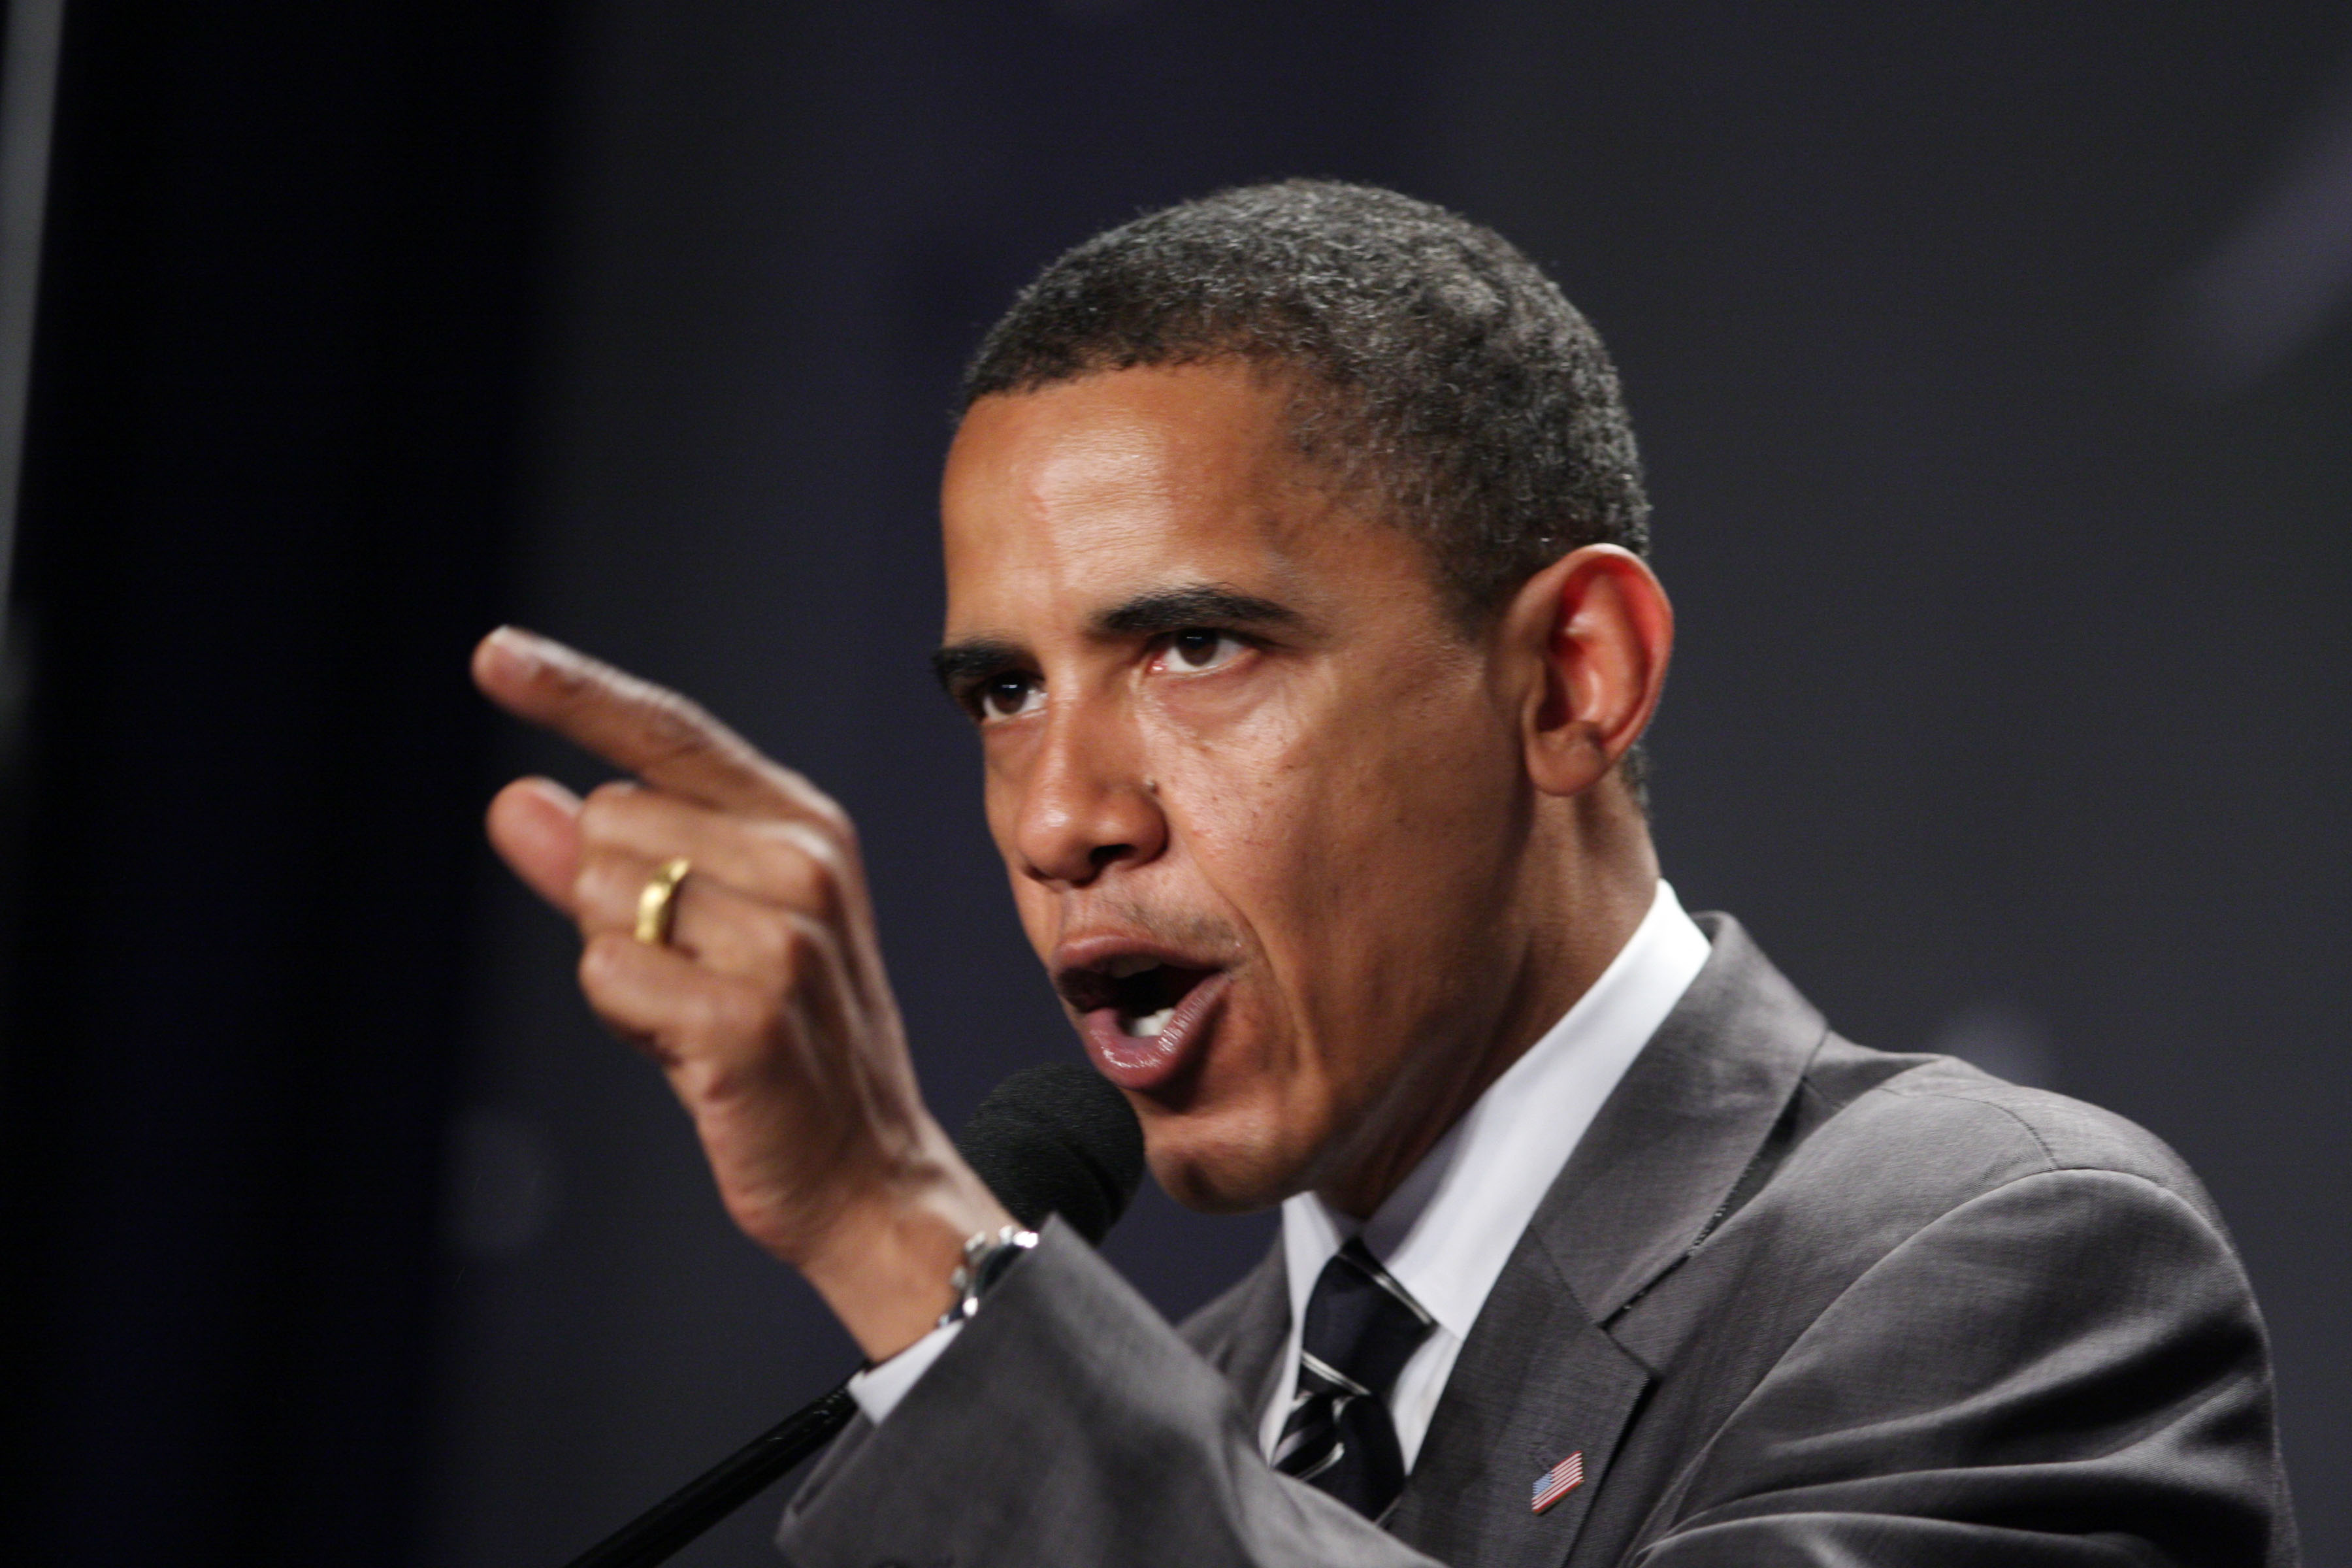 http://www.conunderground.com/wp-content/uploads/2011/09/Obama-intimidating-on-facebook.jpg